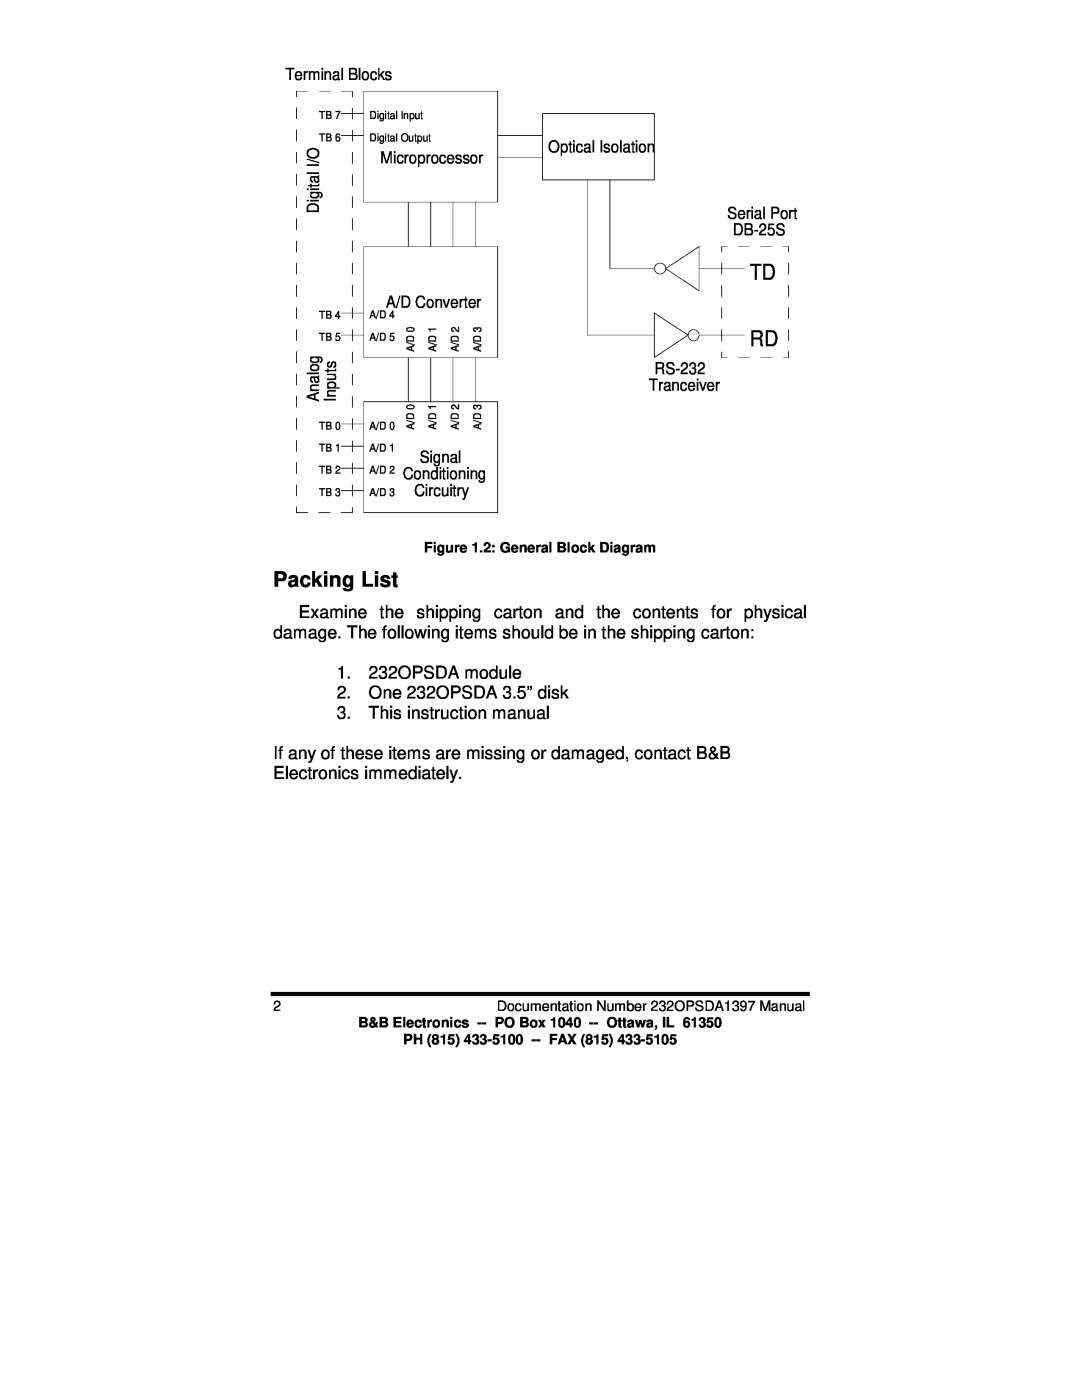 B&B Electronics 232OPSDA manual Packing List, Td Rd 